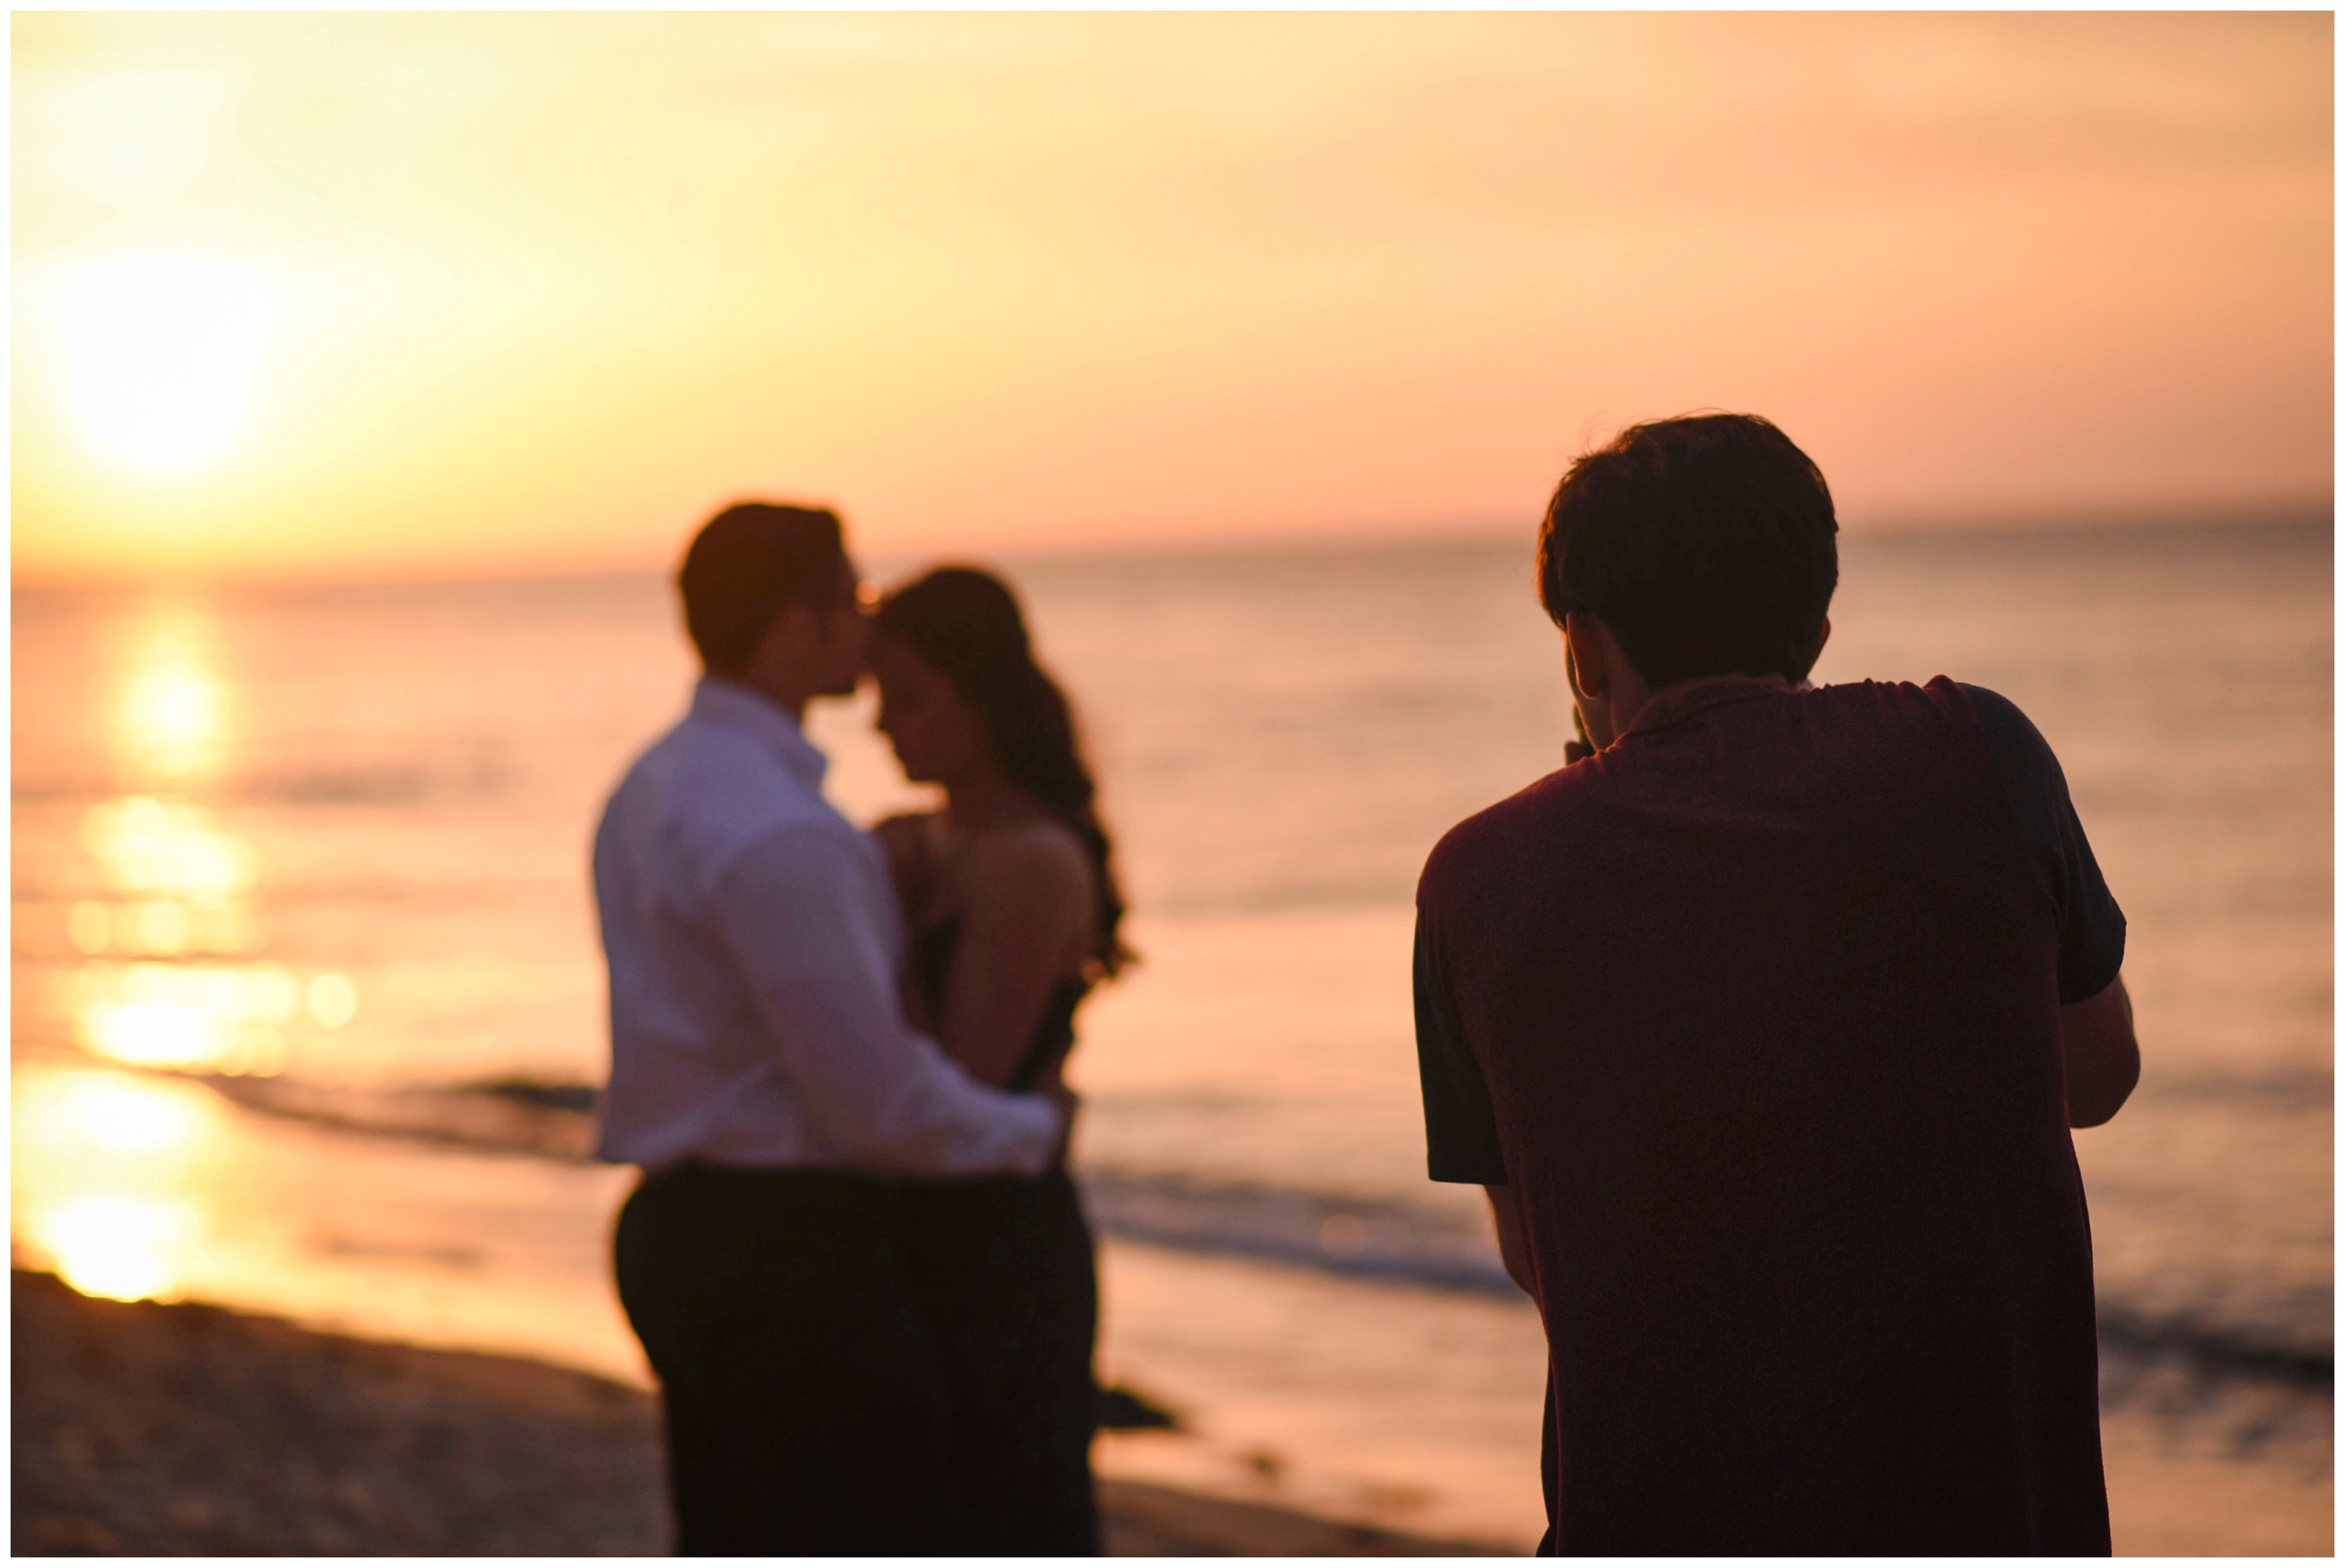 hampton roads wedding photographer capturing couple at sunset on the beach